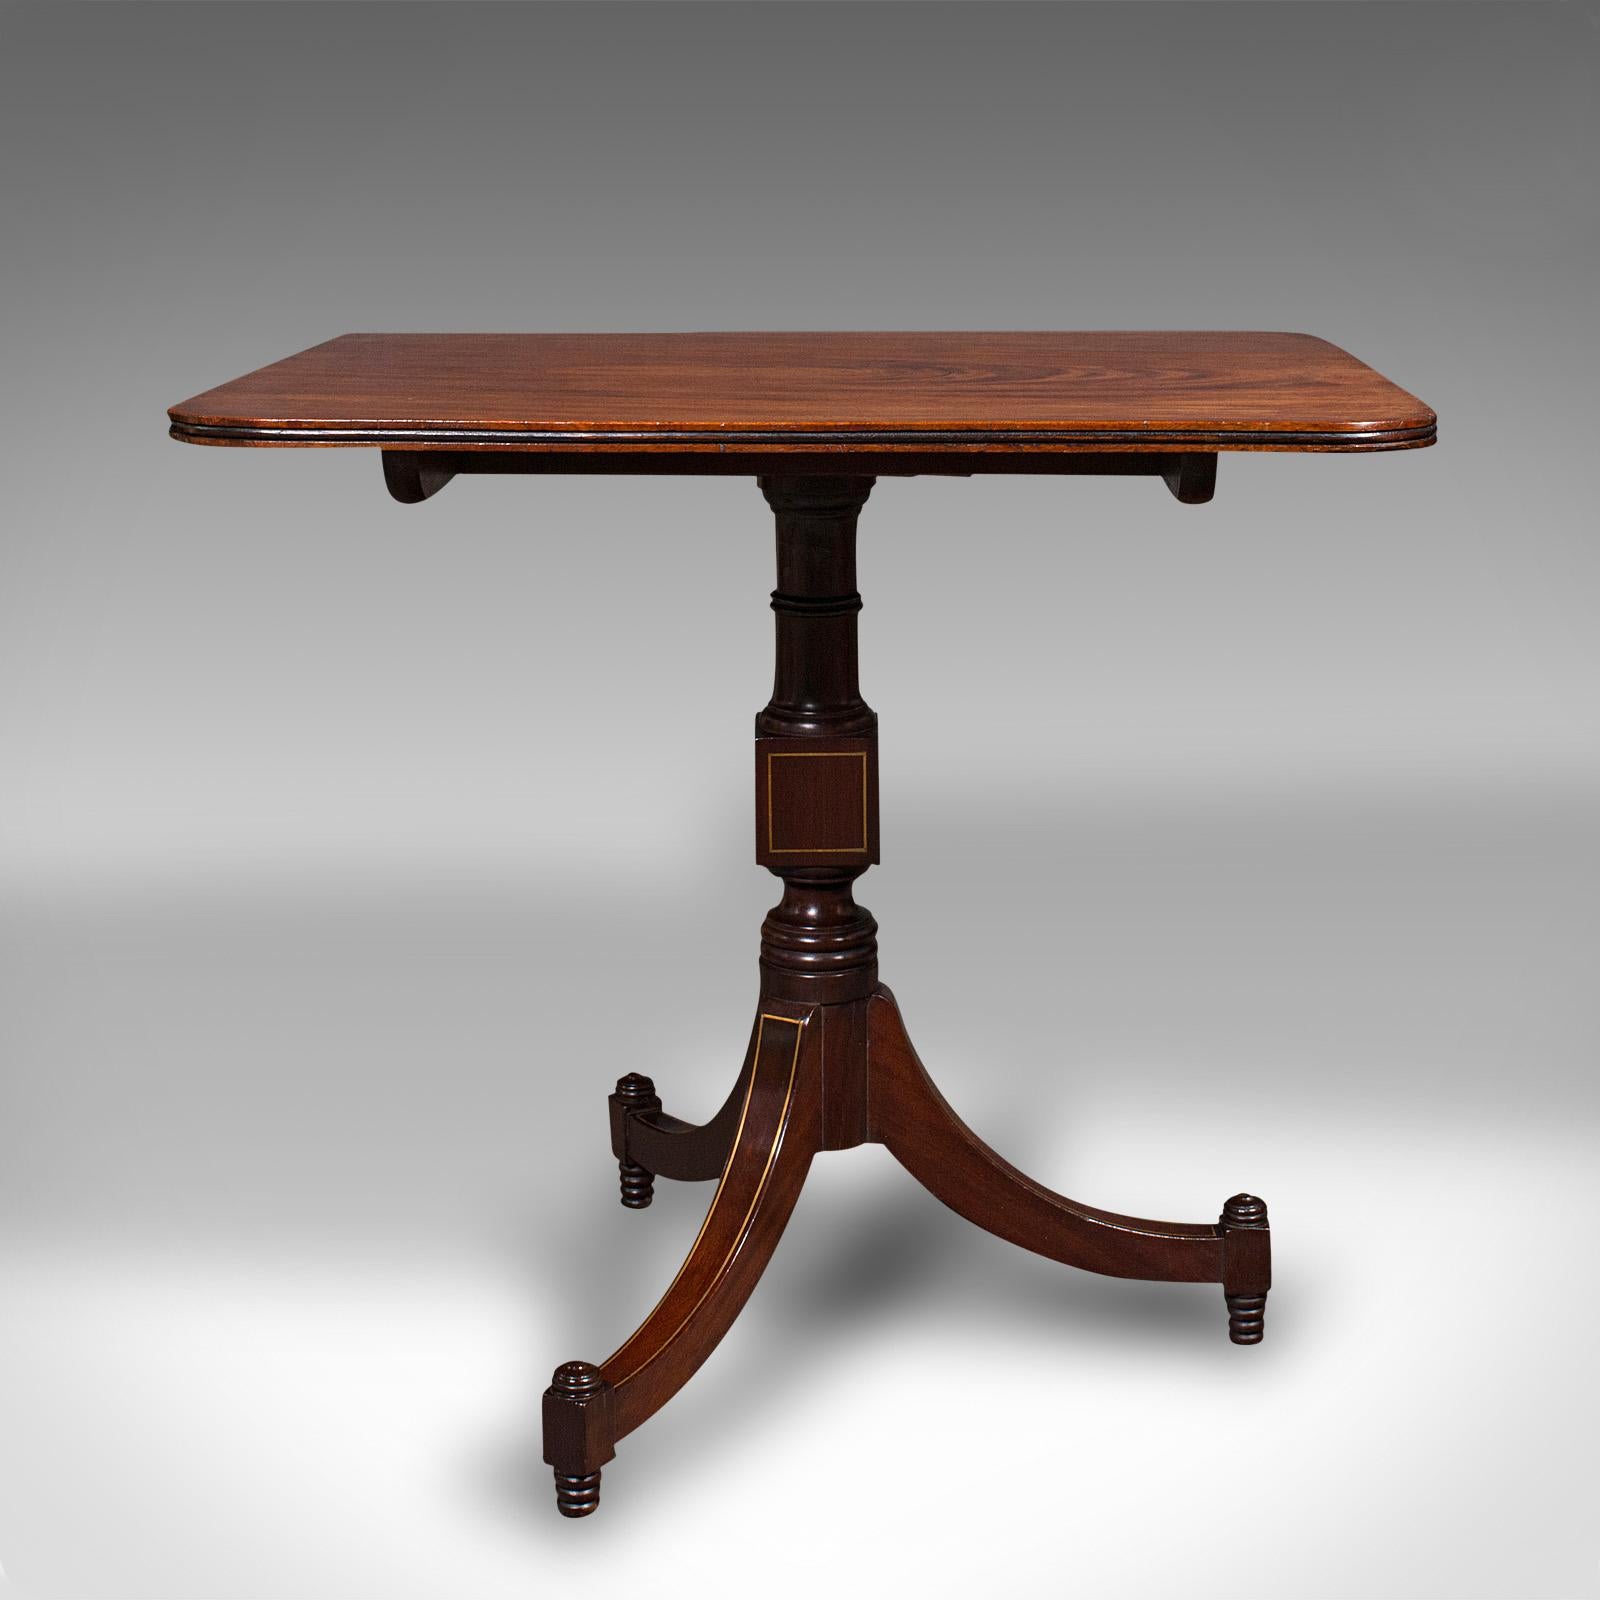 Wood Antique Occasional Table, English, Tilt Top, Lamp, Wine, Empire Taste, Regency For Sale